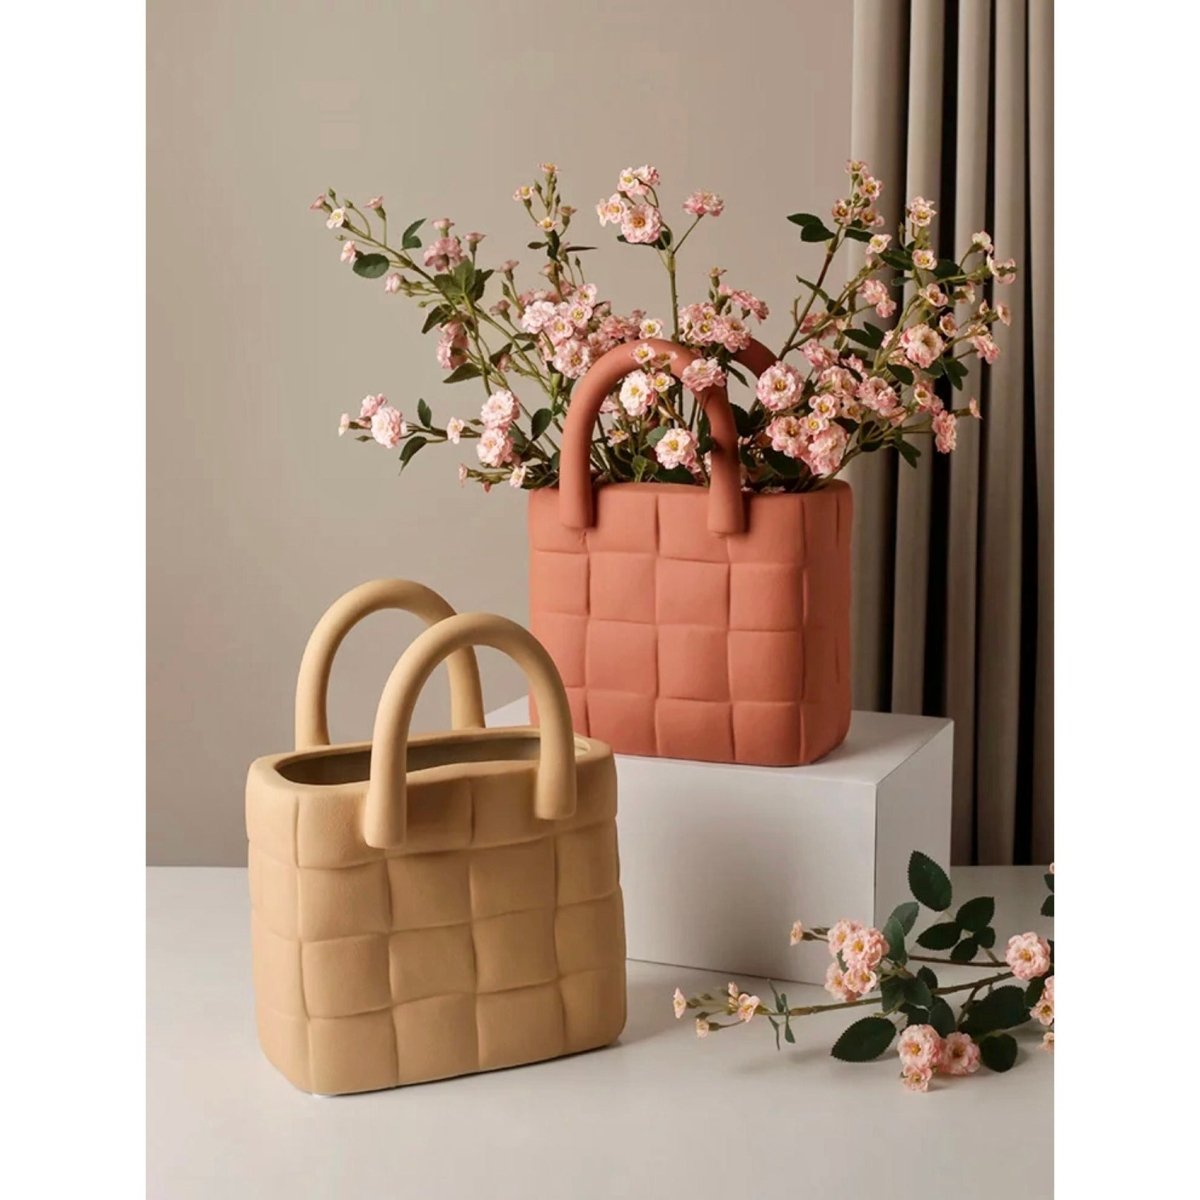 Handbag Ceramic Vase, Exquisite Home Decor Vases - Stylish and Functional